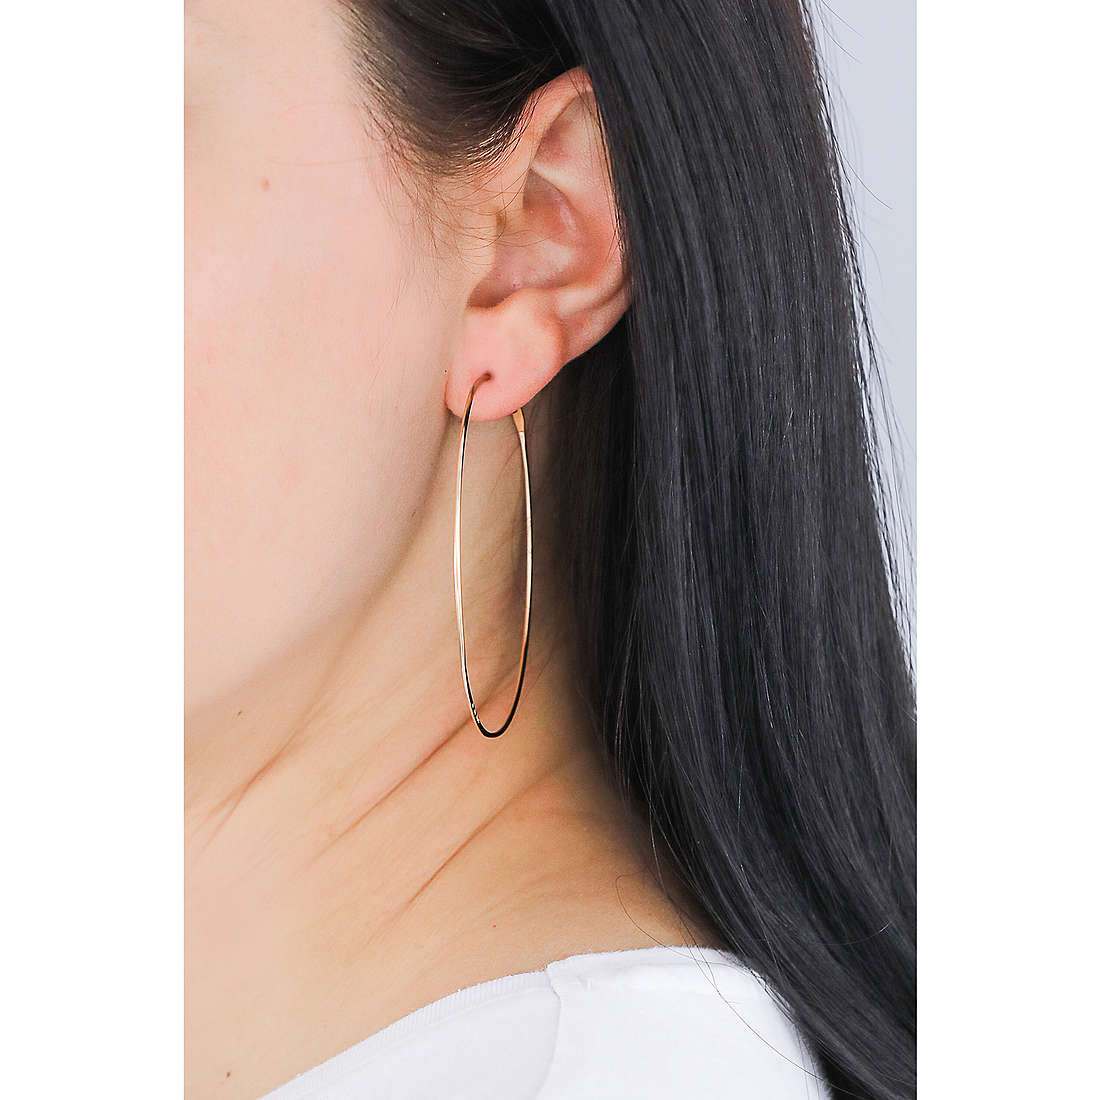 Michael Kors earrings Kors Mk woman MKC1411AA791 wearing